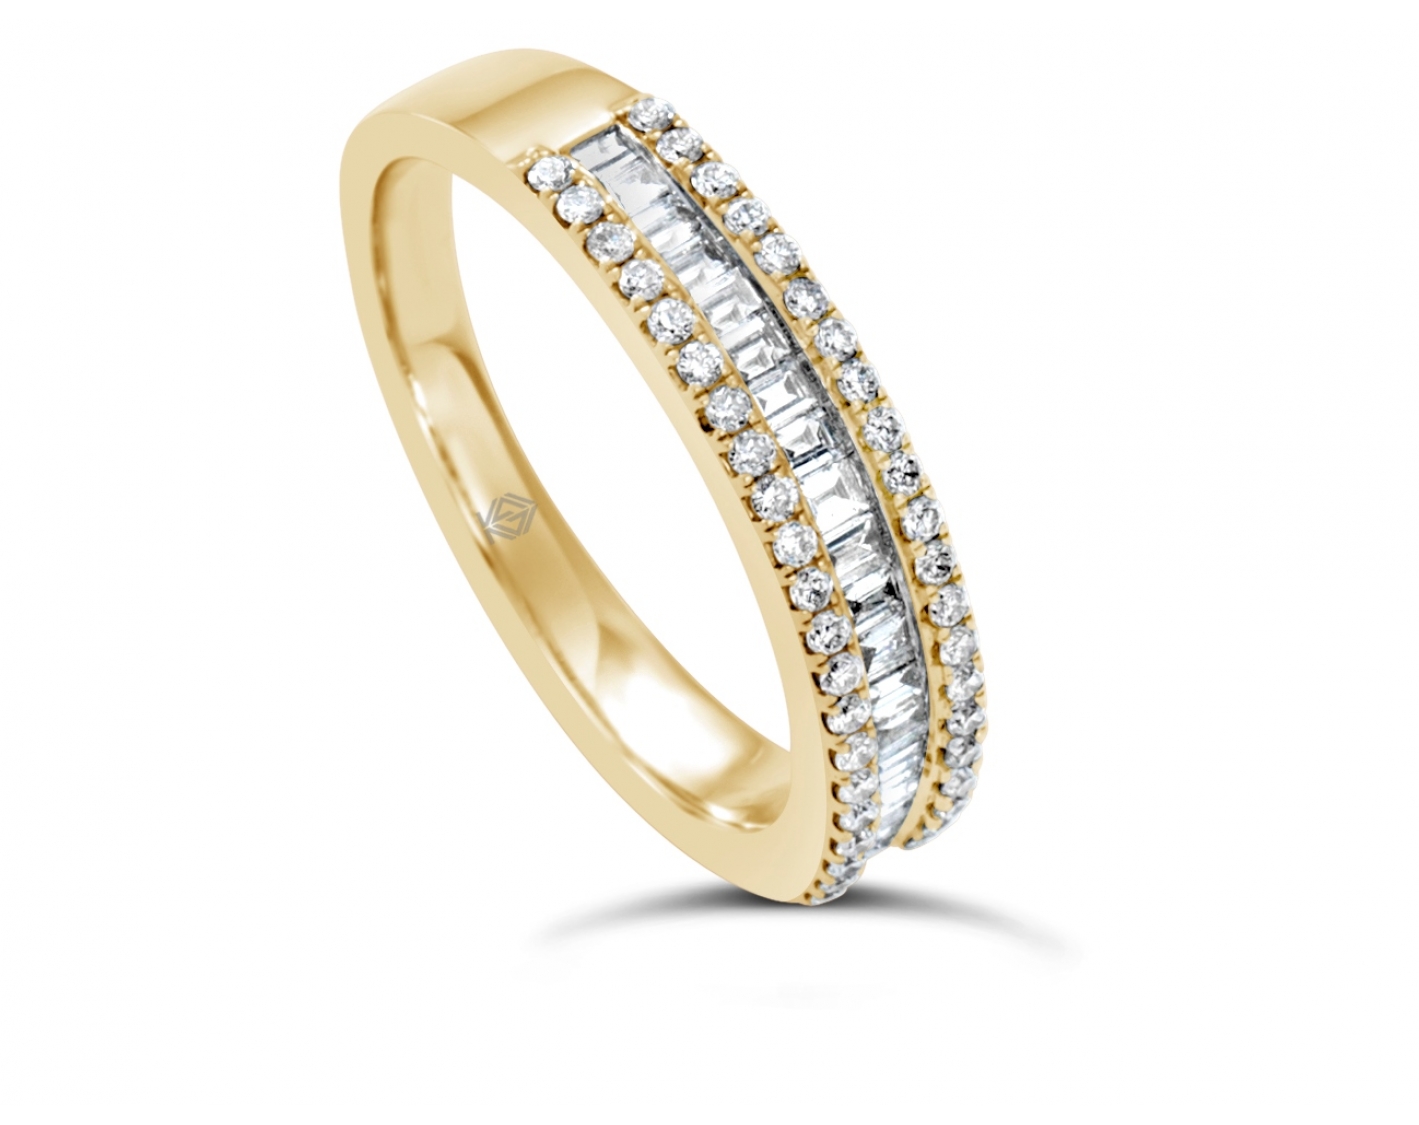 18k yellow gold half eternity round & emerald cut diamonds in pave & channel set wedding band